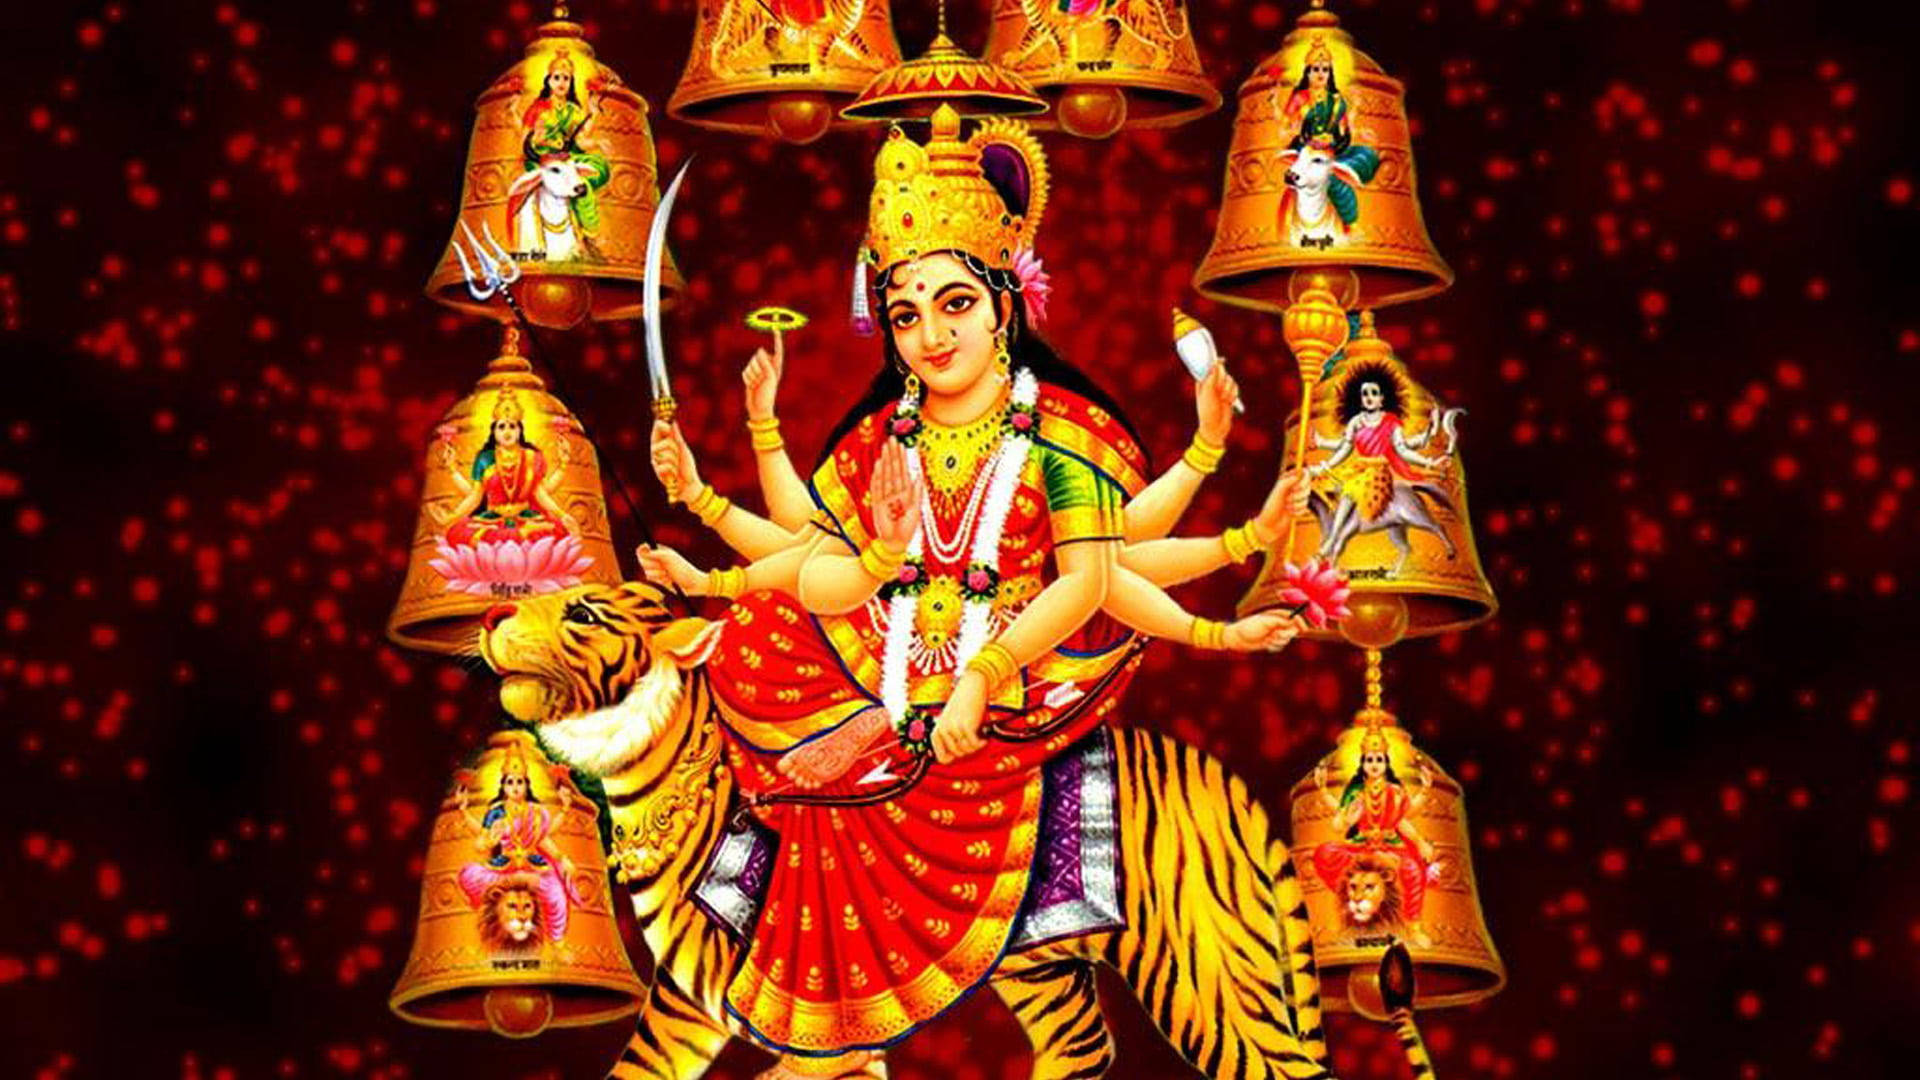 Free Durga Devi Wallpaper Downloads, [100+] Durga Devi Wallpapers for FREE  